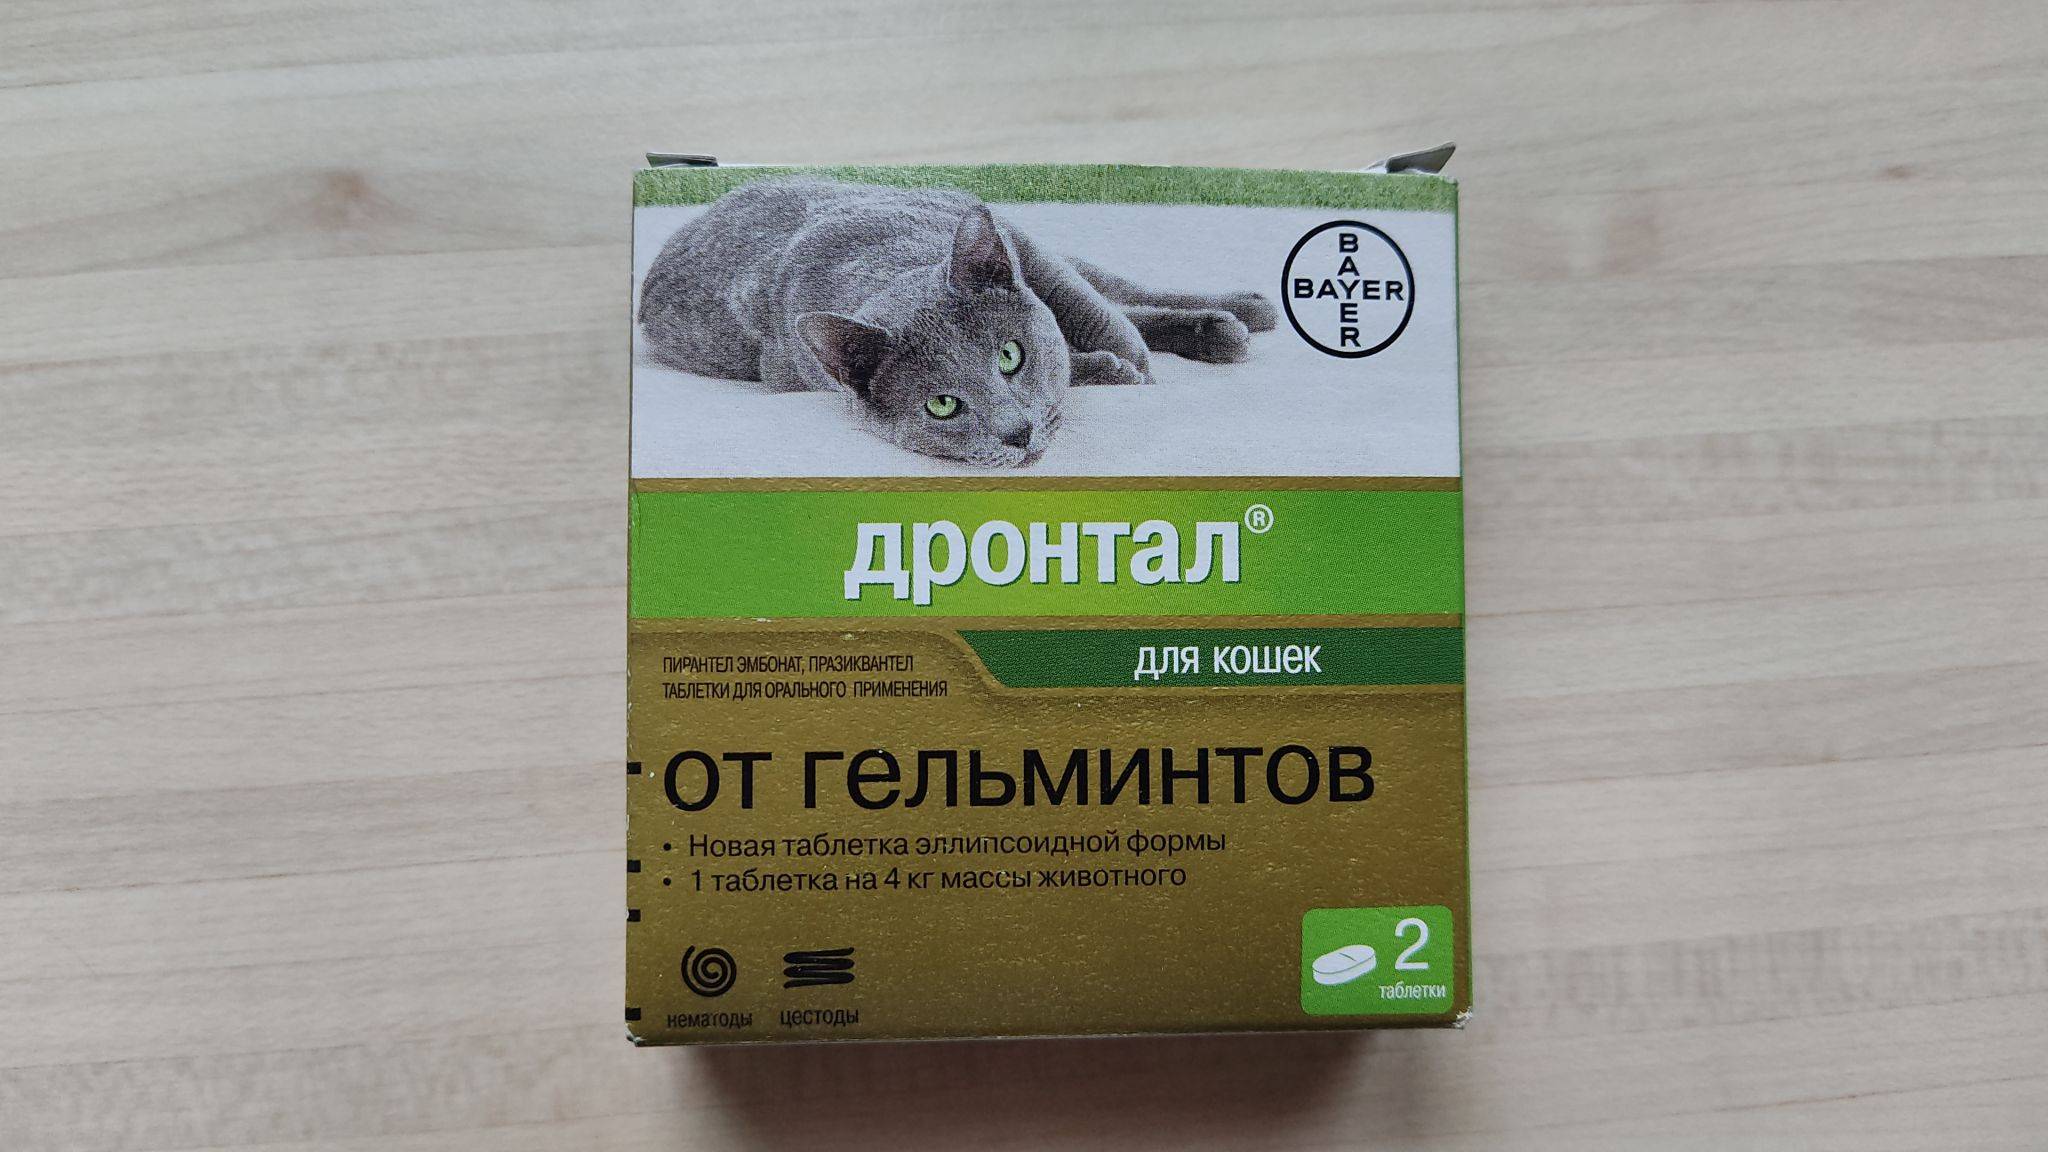 Дронтал для кошек | препарат для борьбы с паразитами